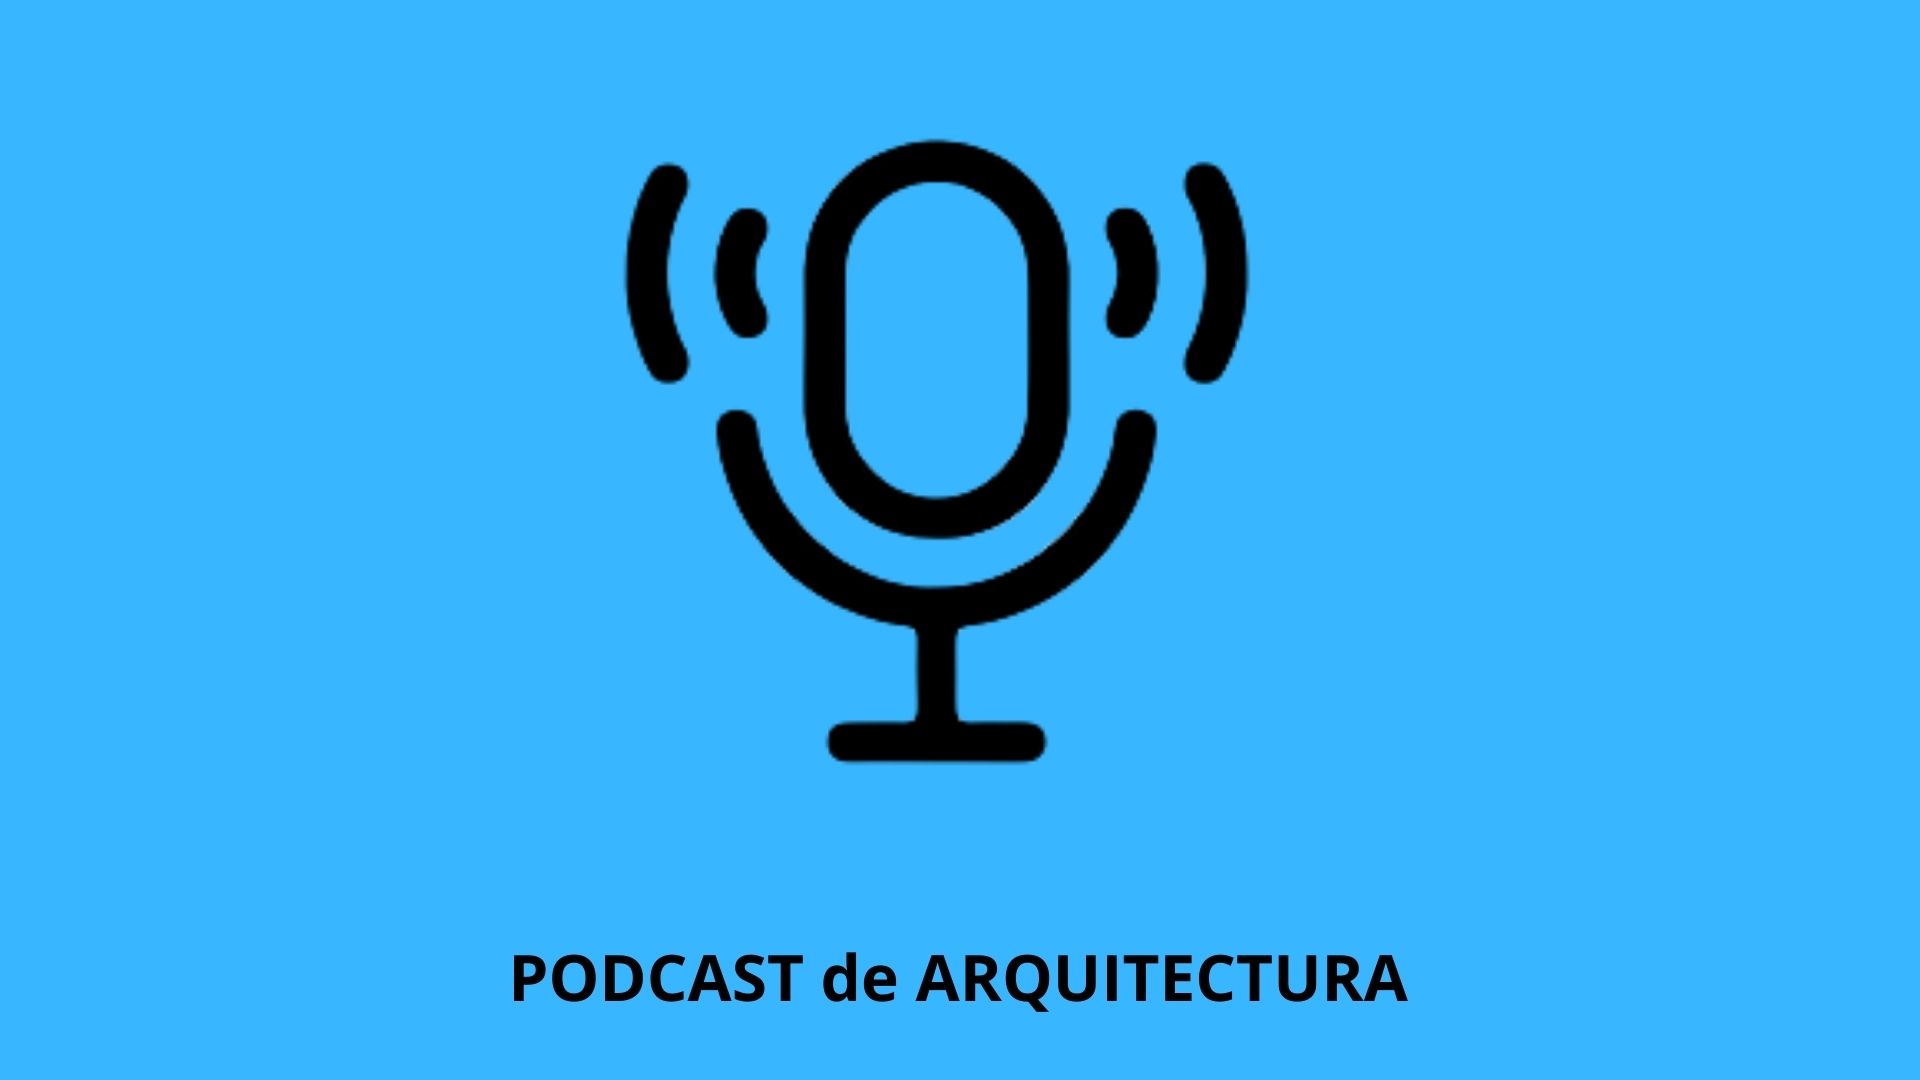 LMEY arquitectura, mejor podcast de Historia y Cultura 2014